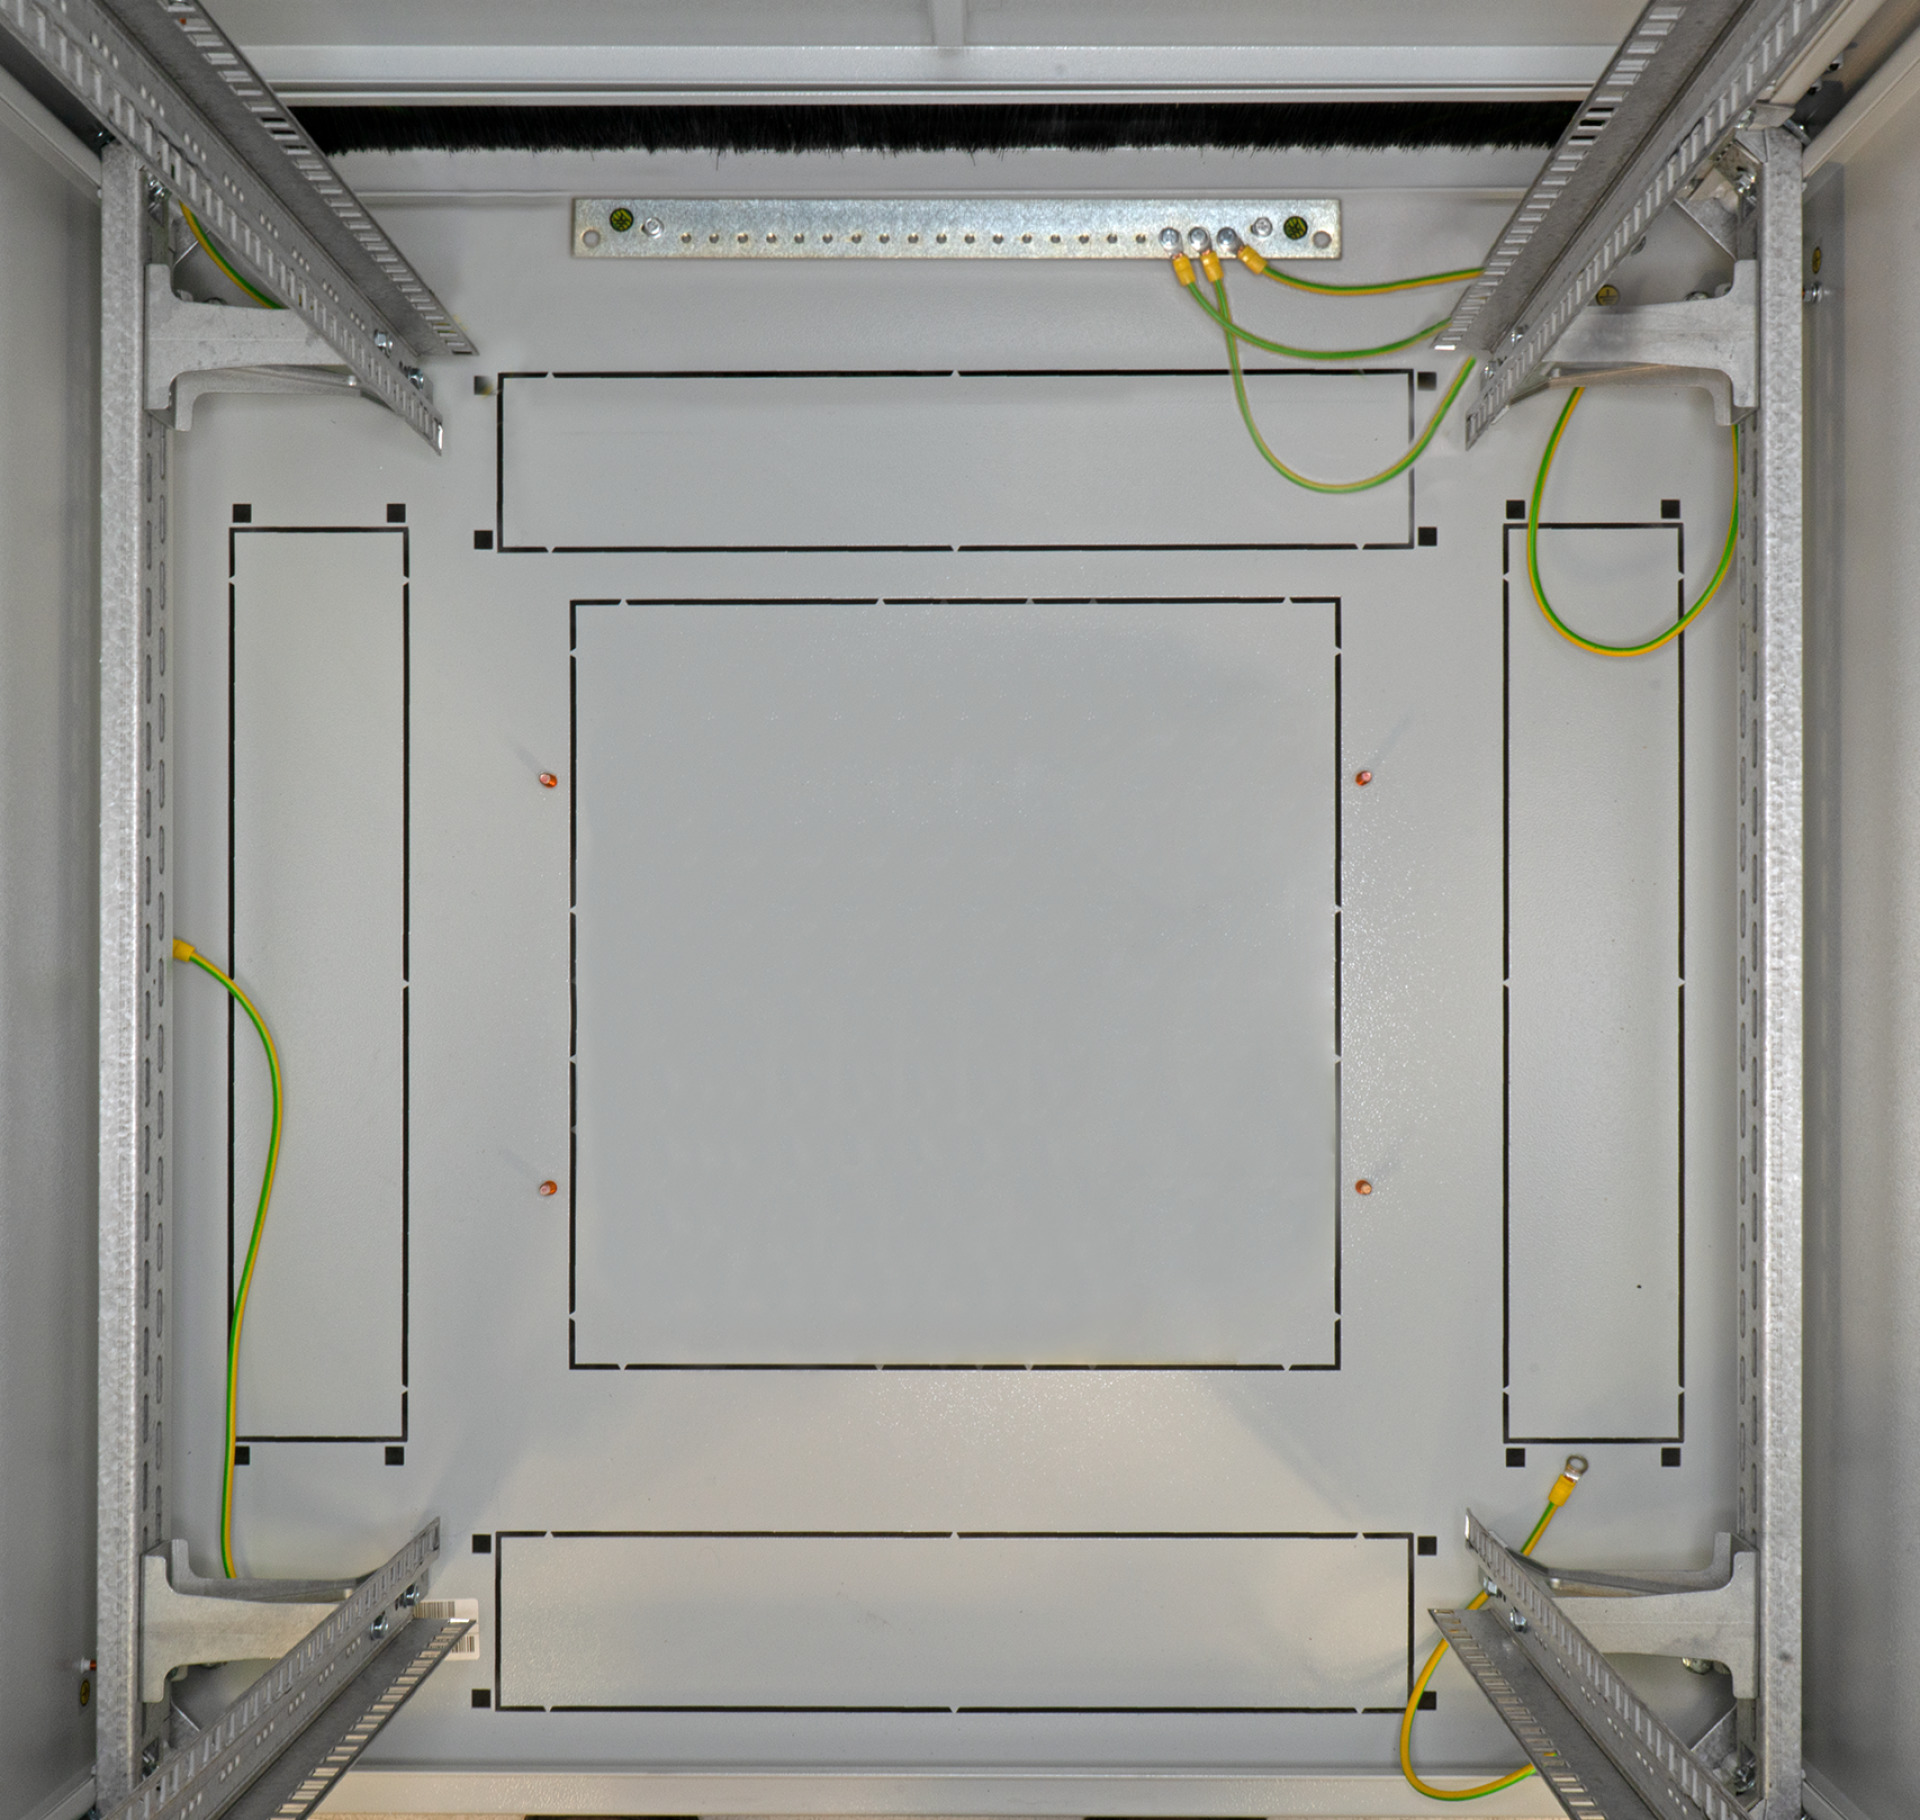 19" Network Cabinet PRO 42U, 800x800 mm, RAL7035